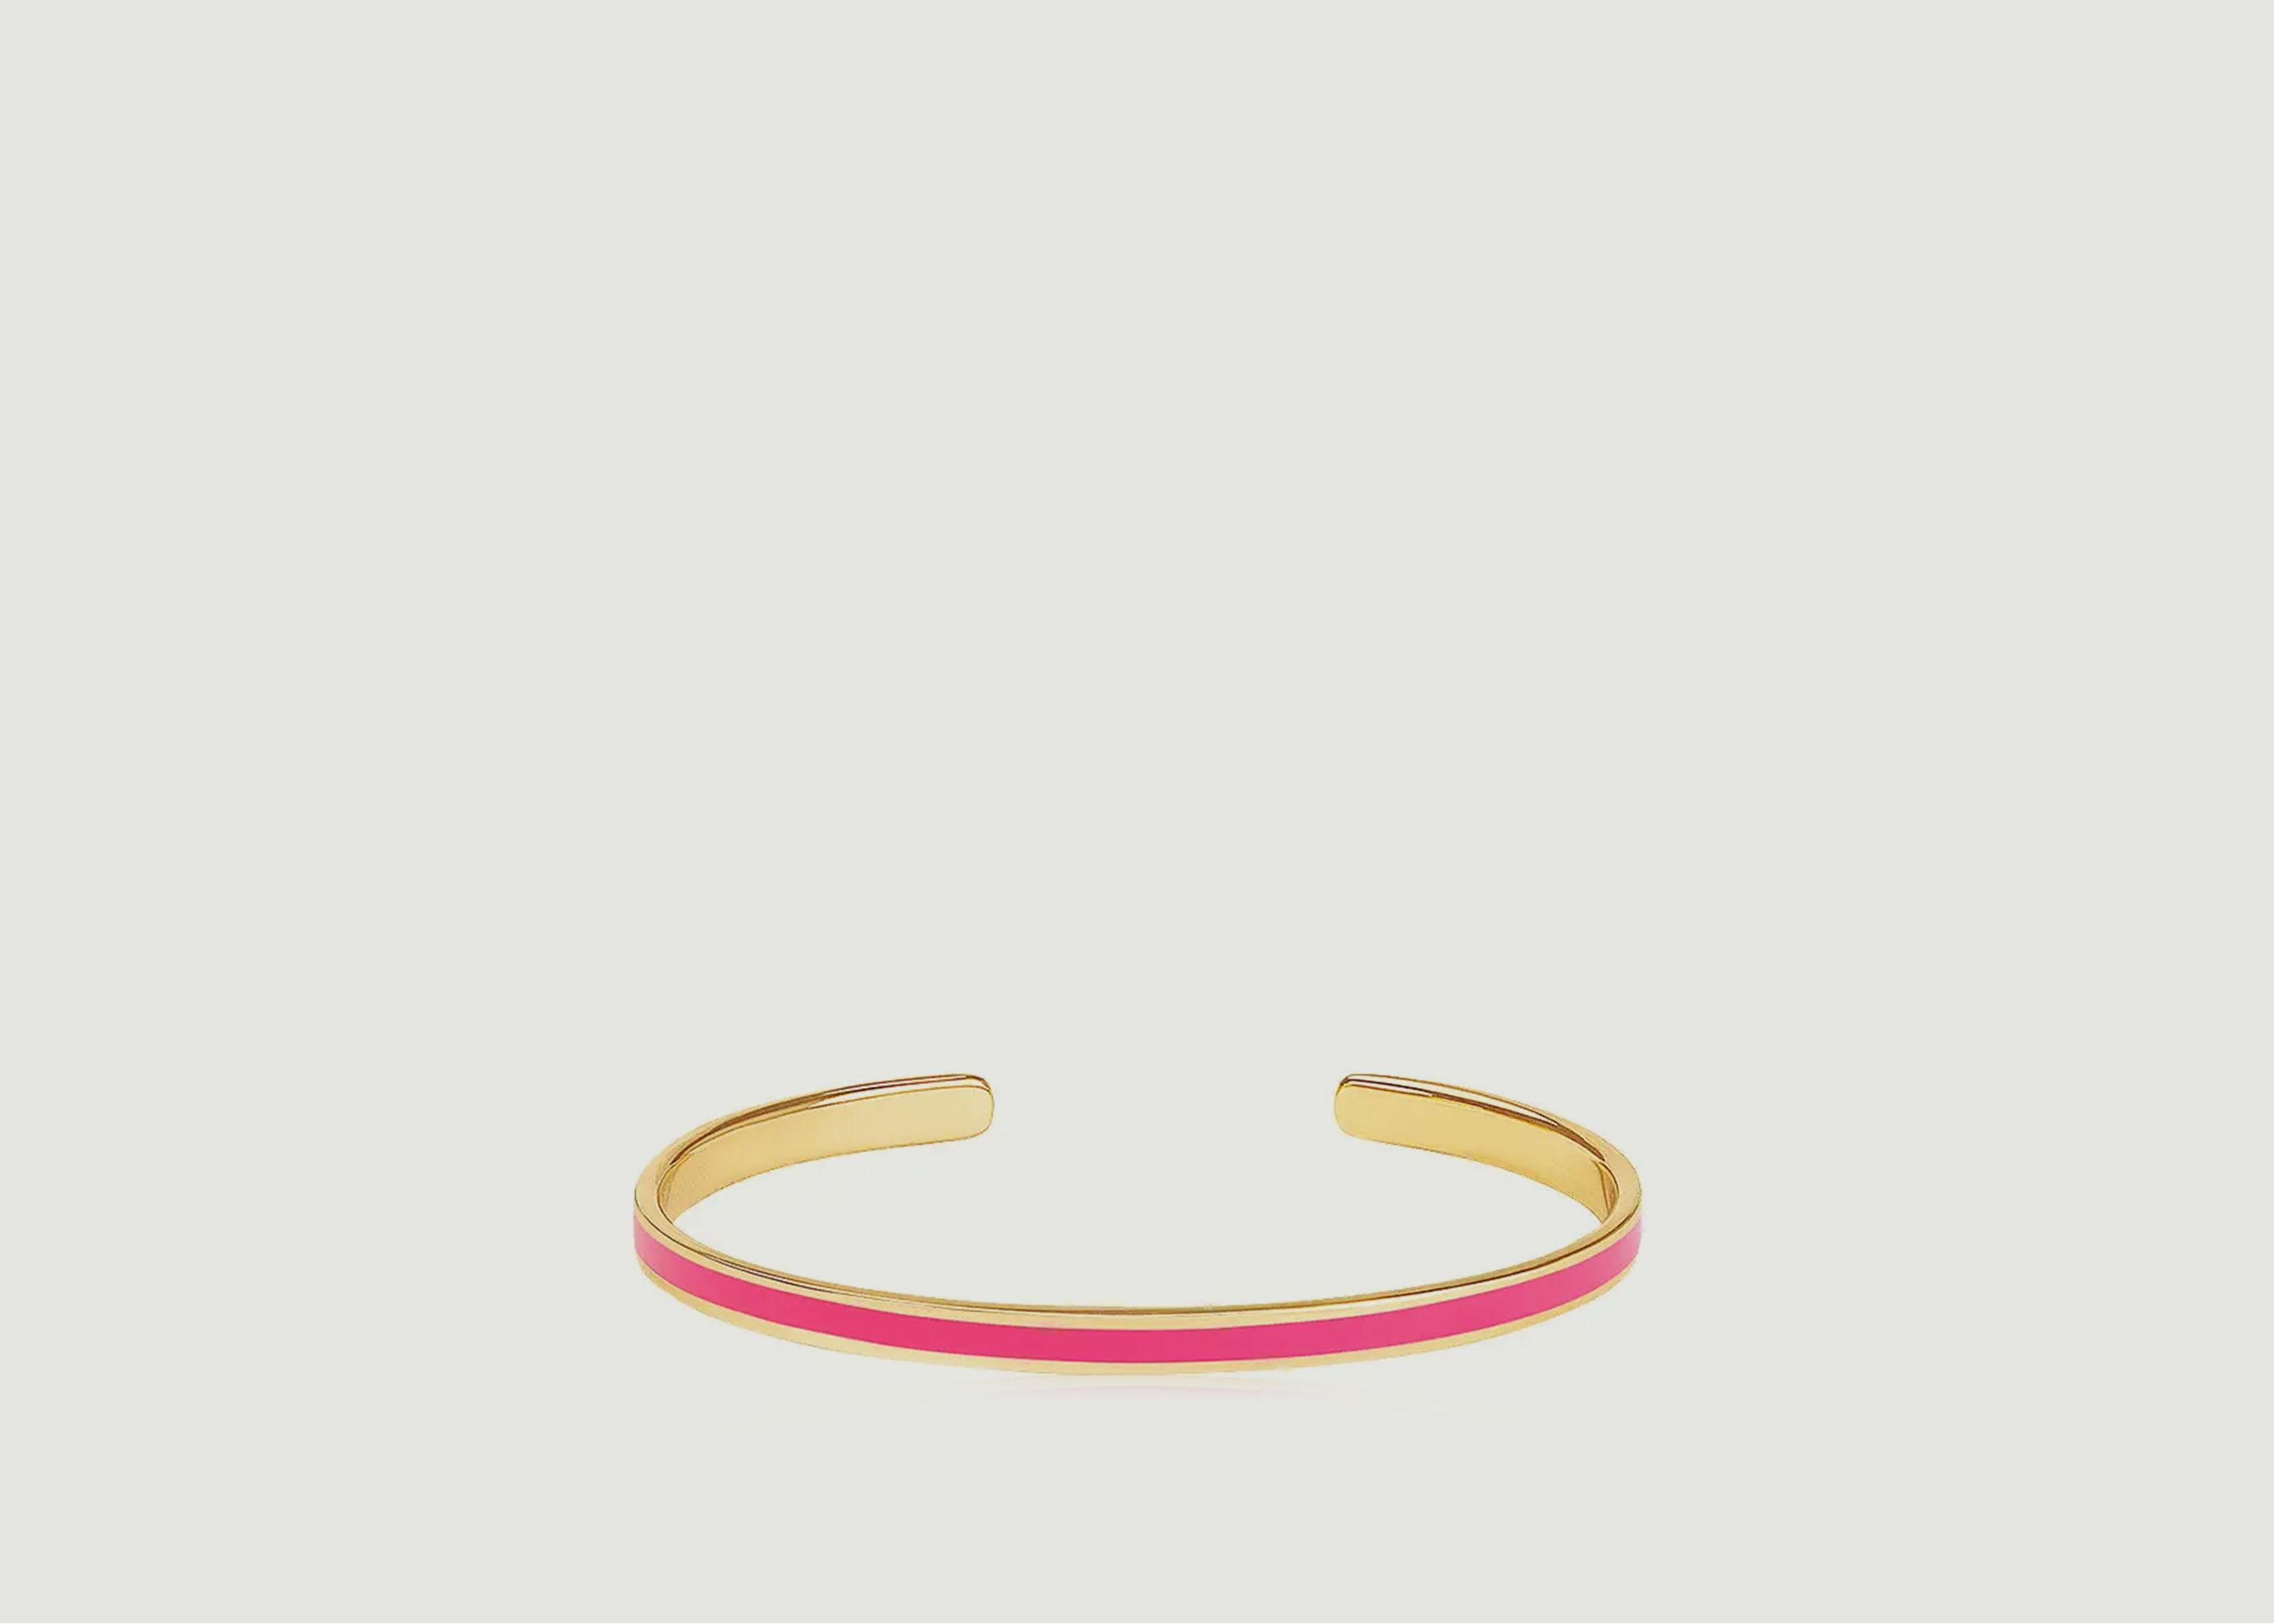 Verstellbarer offener Bangle-Ring aus vergoldetem, lackiertem Messing - Bangle Up